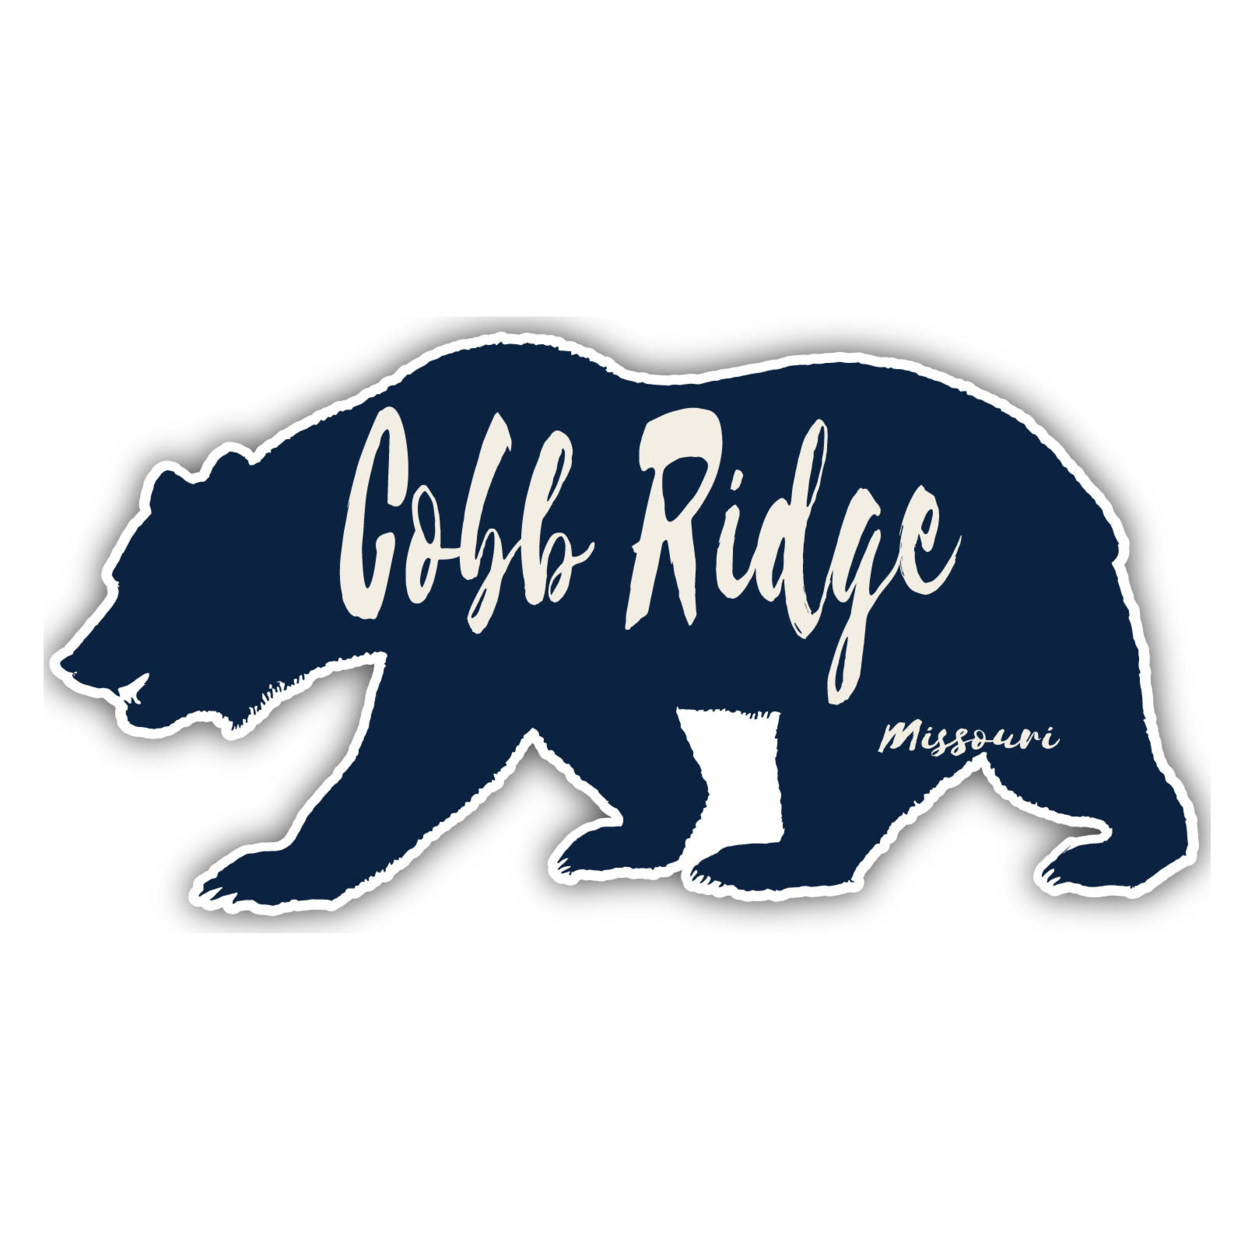 Cobb Ridge Missouri Souvenir Decorative Stickers (Choose Theme And Size) - Single Unit, 6-Inch, Bear